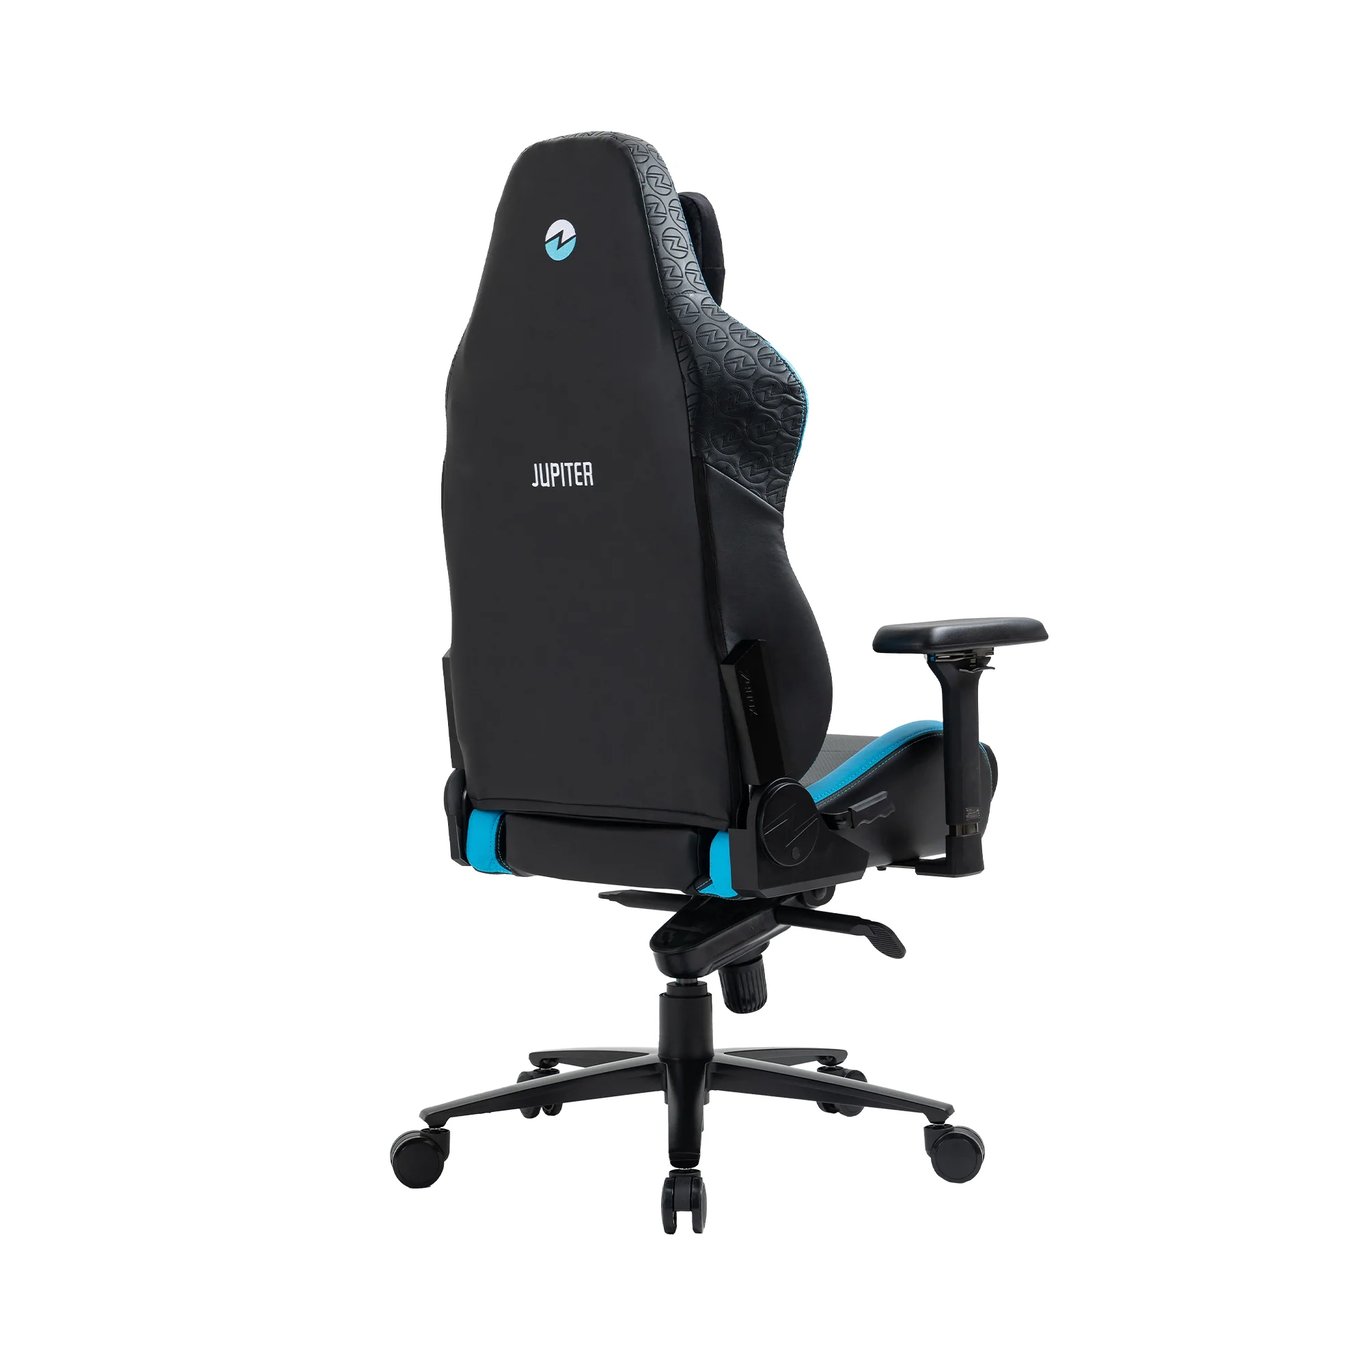 Zenox Jupiter-MK2 Racing Chair  - Leather/Sky Blue /-5